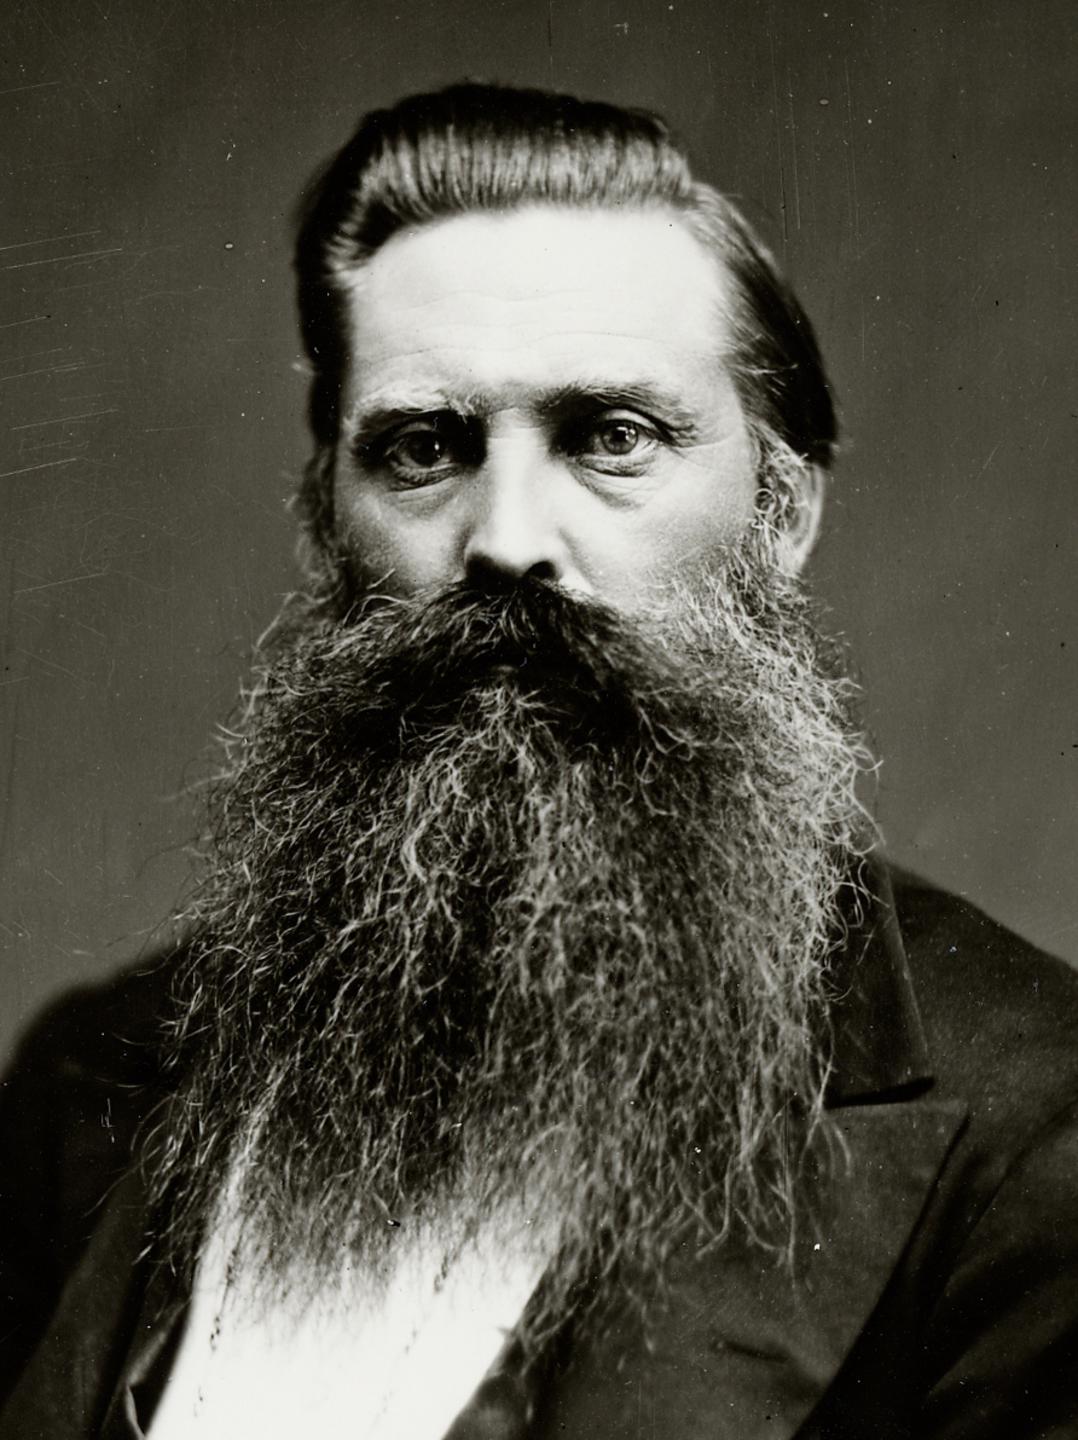 John Smith (1832 - 1911)